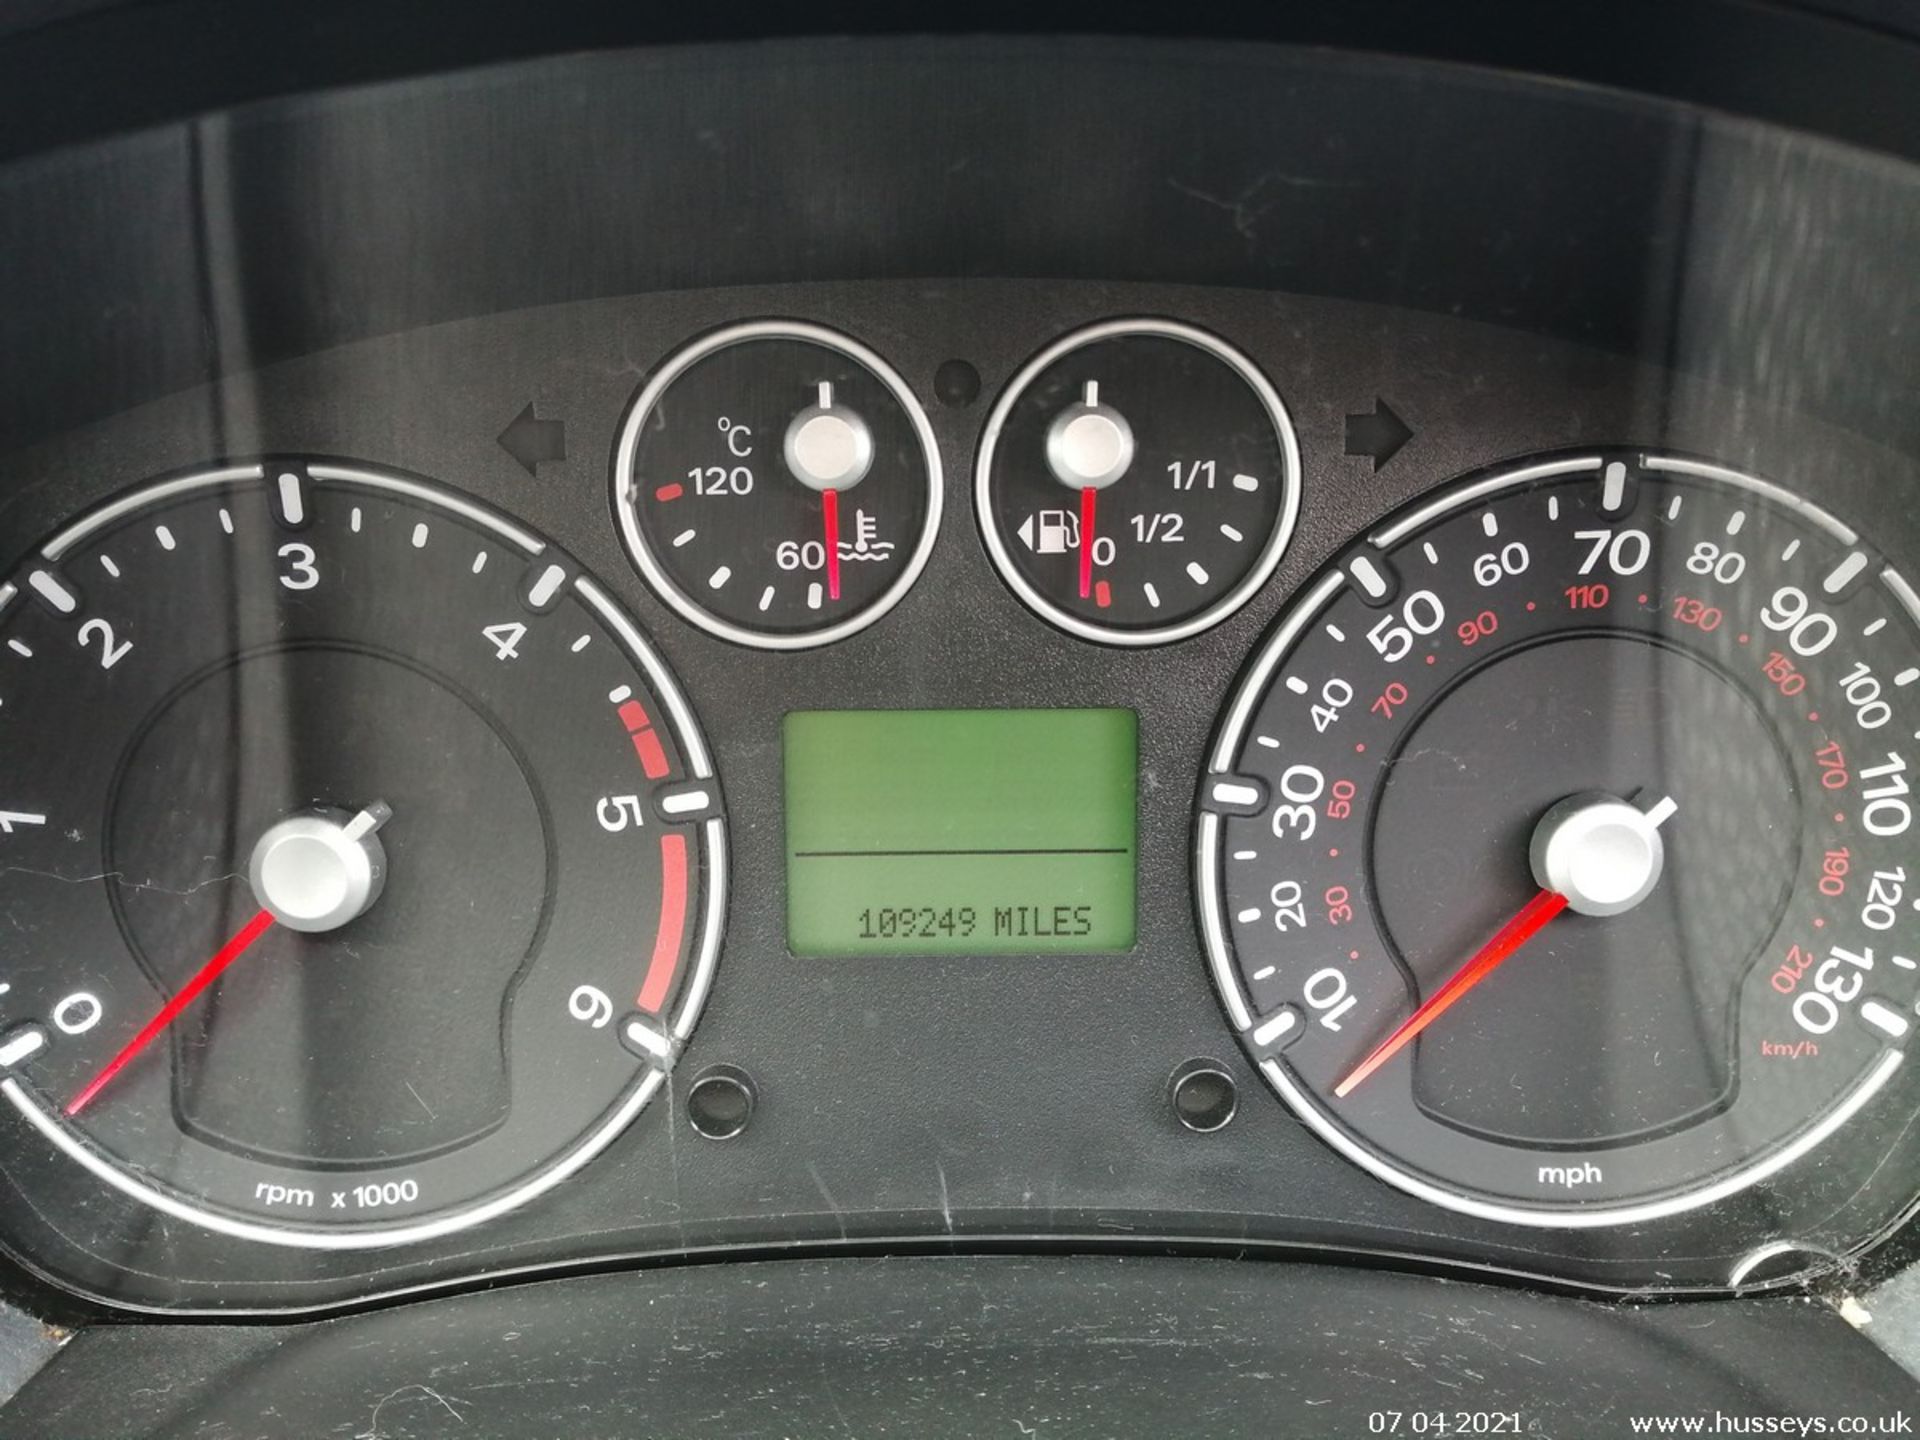 06/56 FORD FIESTA ZETEC CLIMATE TDCI - 1399cc 5dr Hatchback (White, 109k) - Image 4 of 5